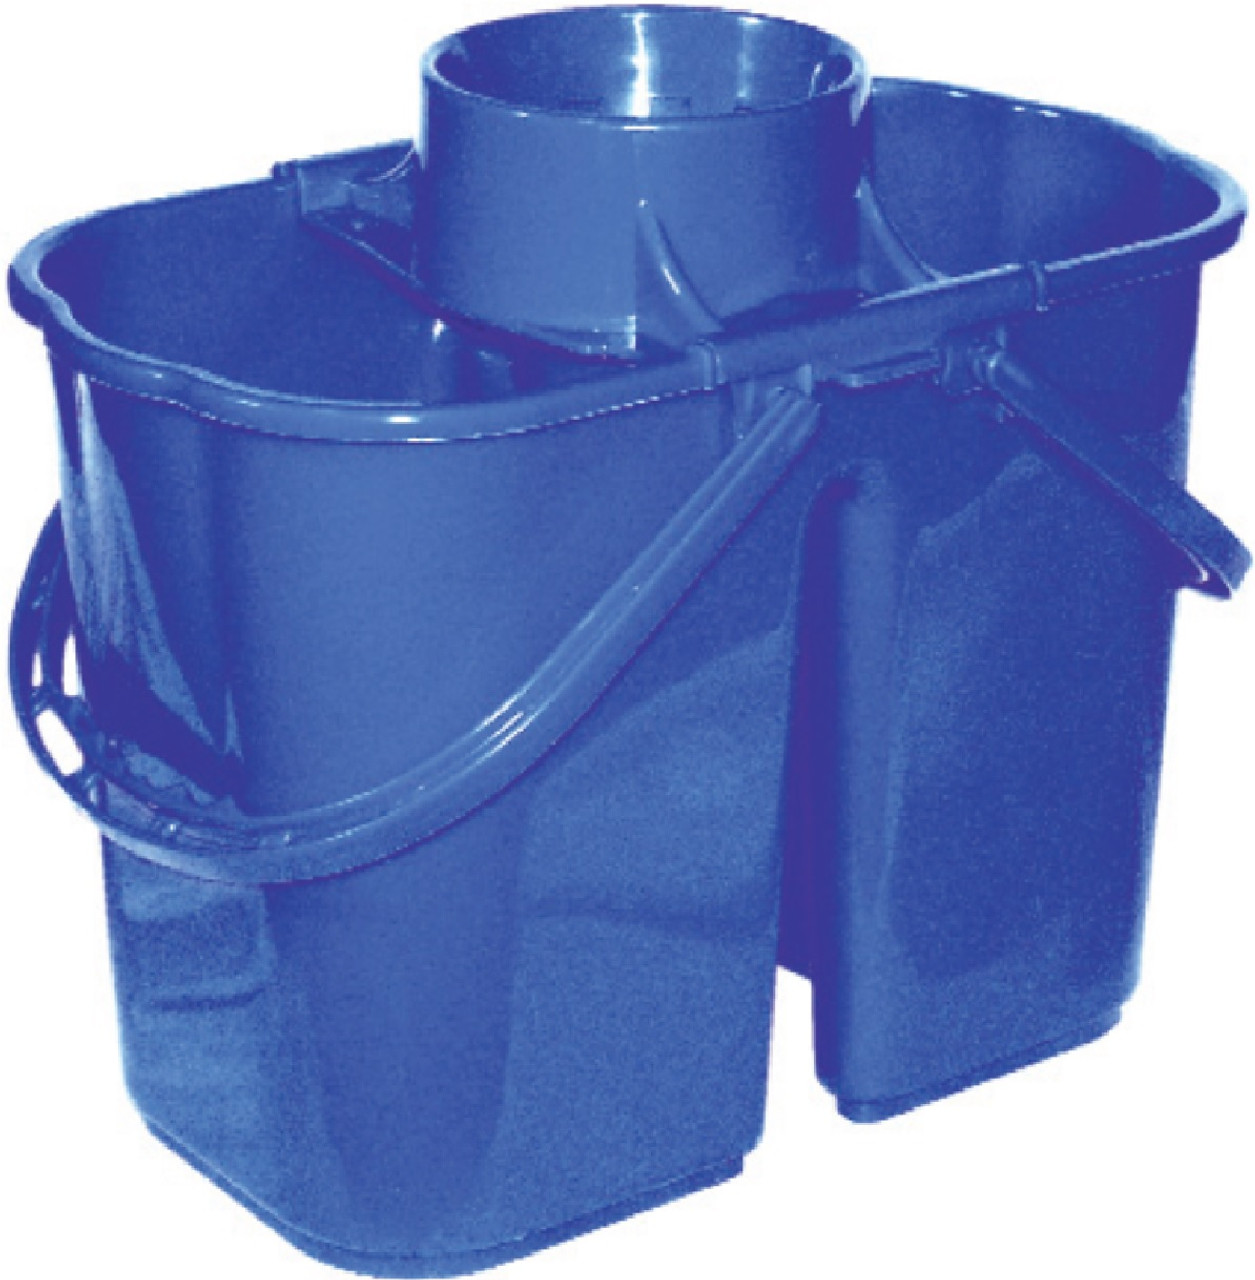 Prison Combo Mop Bucket No Metal 16 Quart